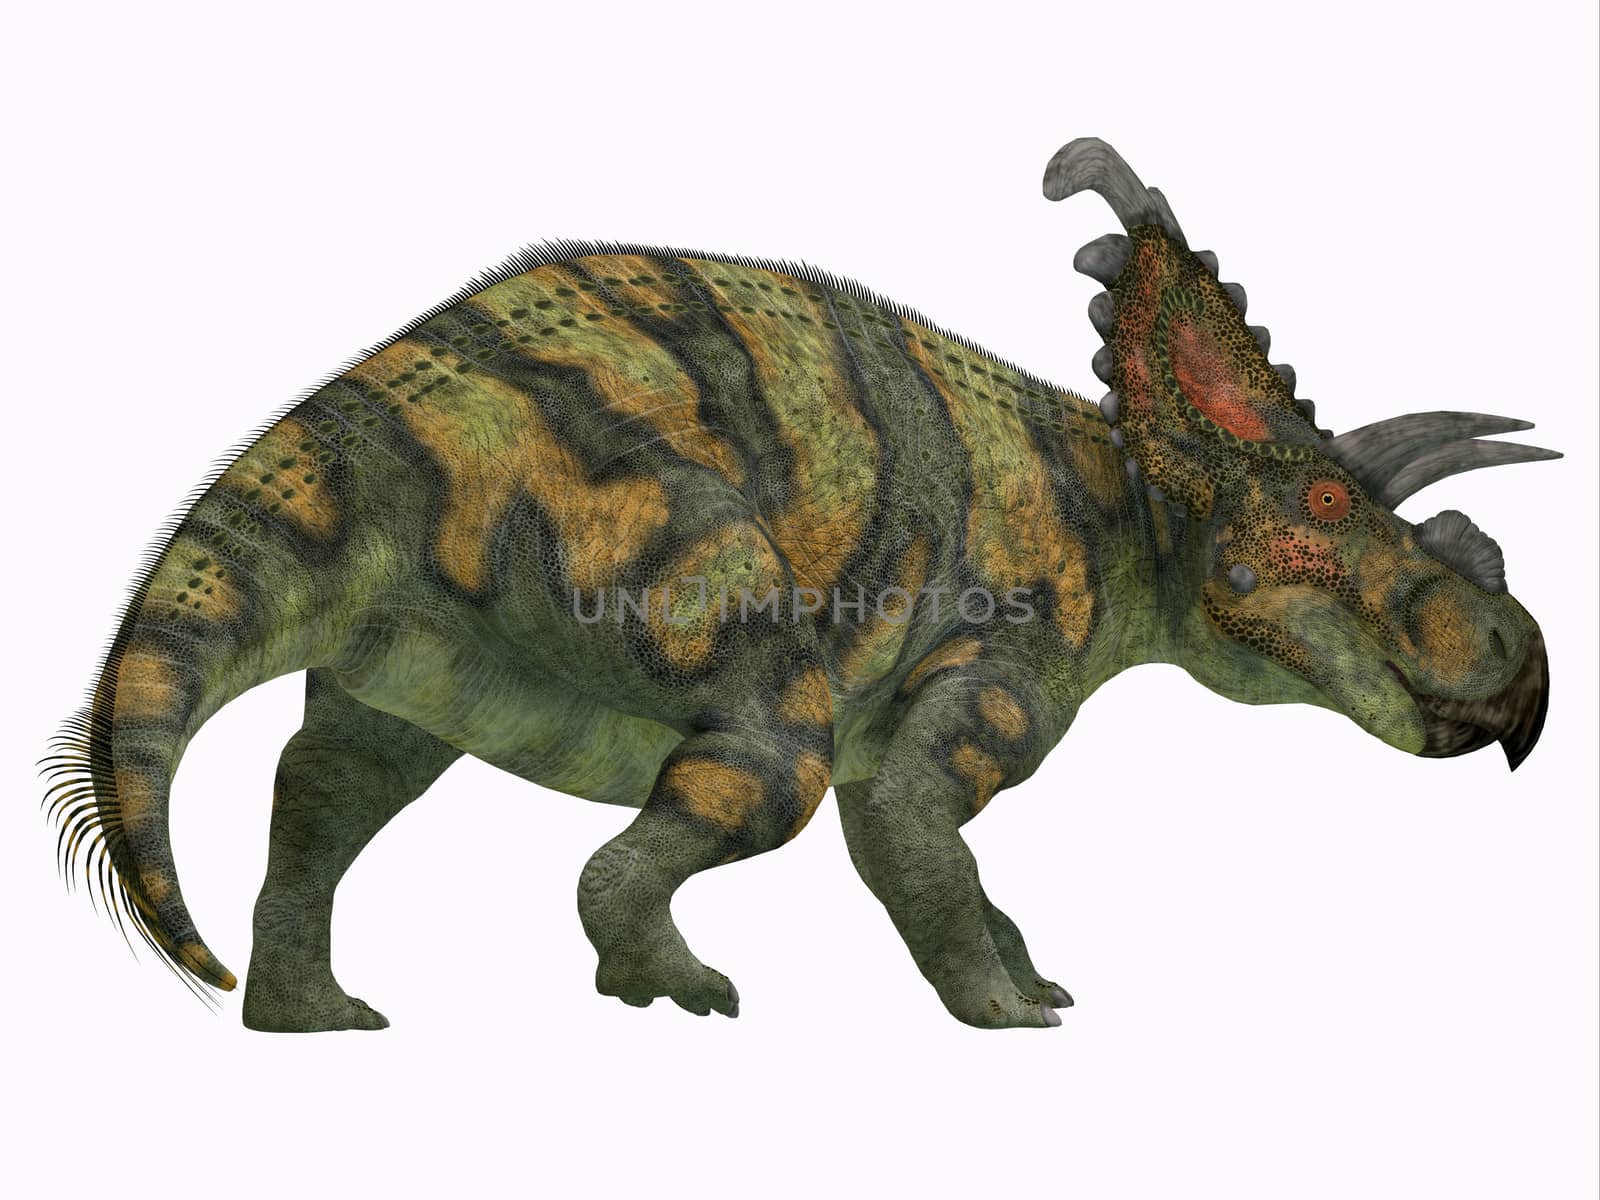 Albertaceratops Dinosaur Tail by Catmando